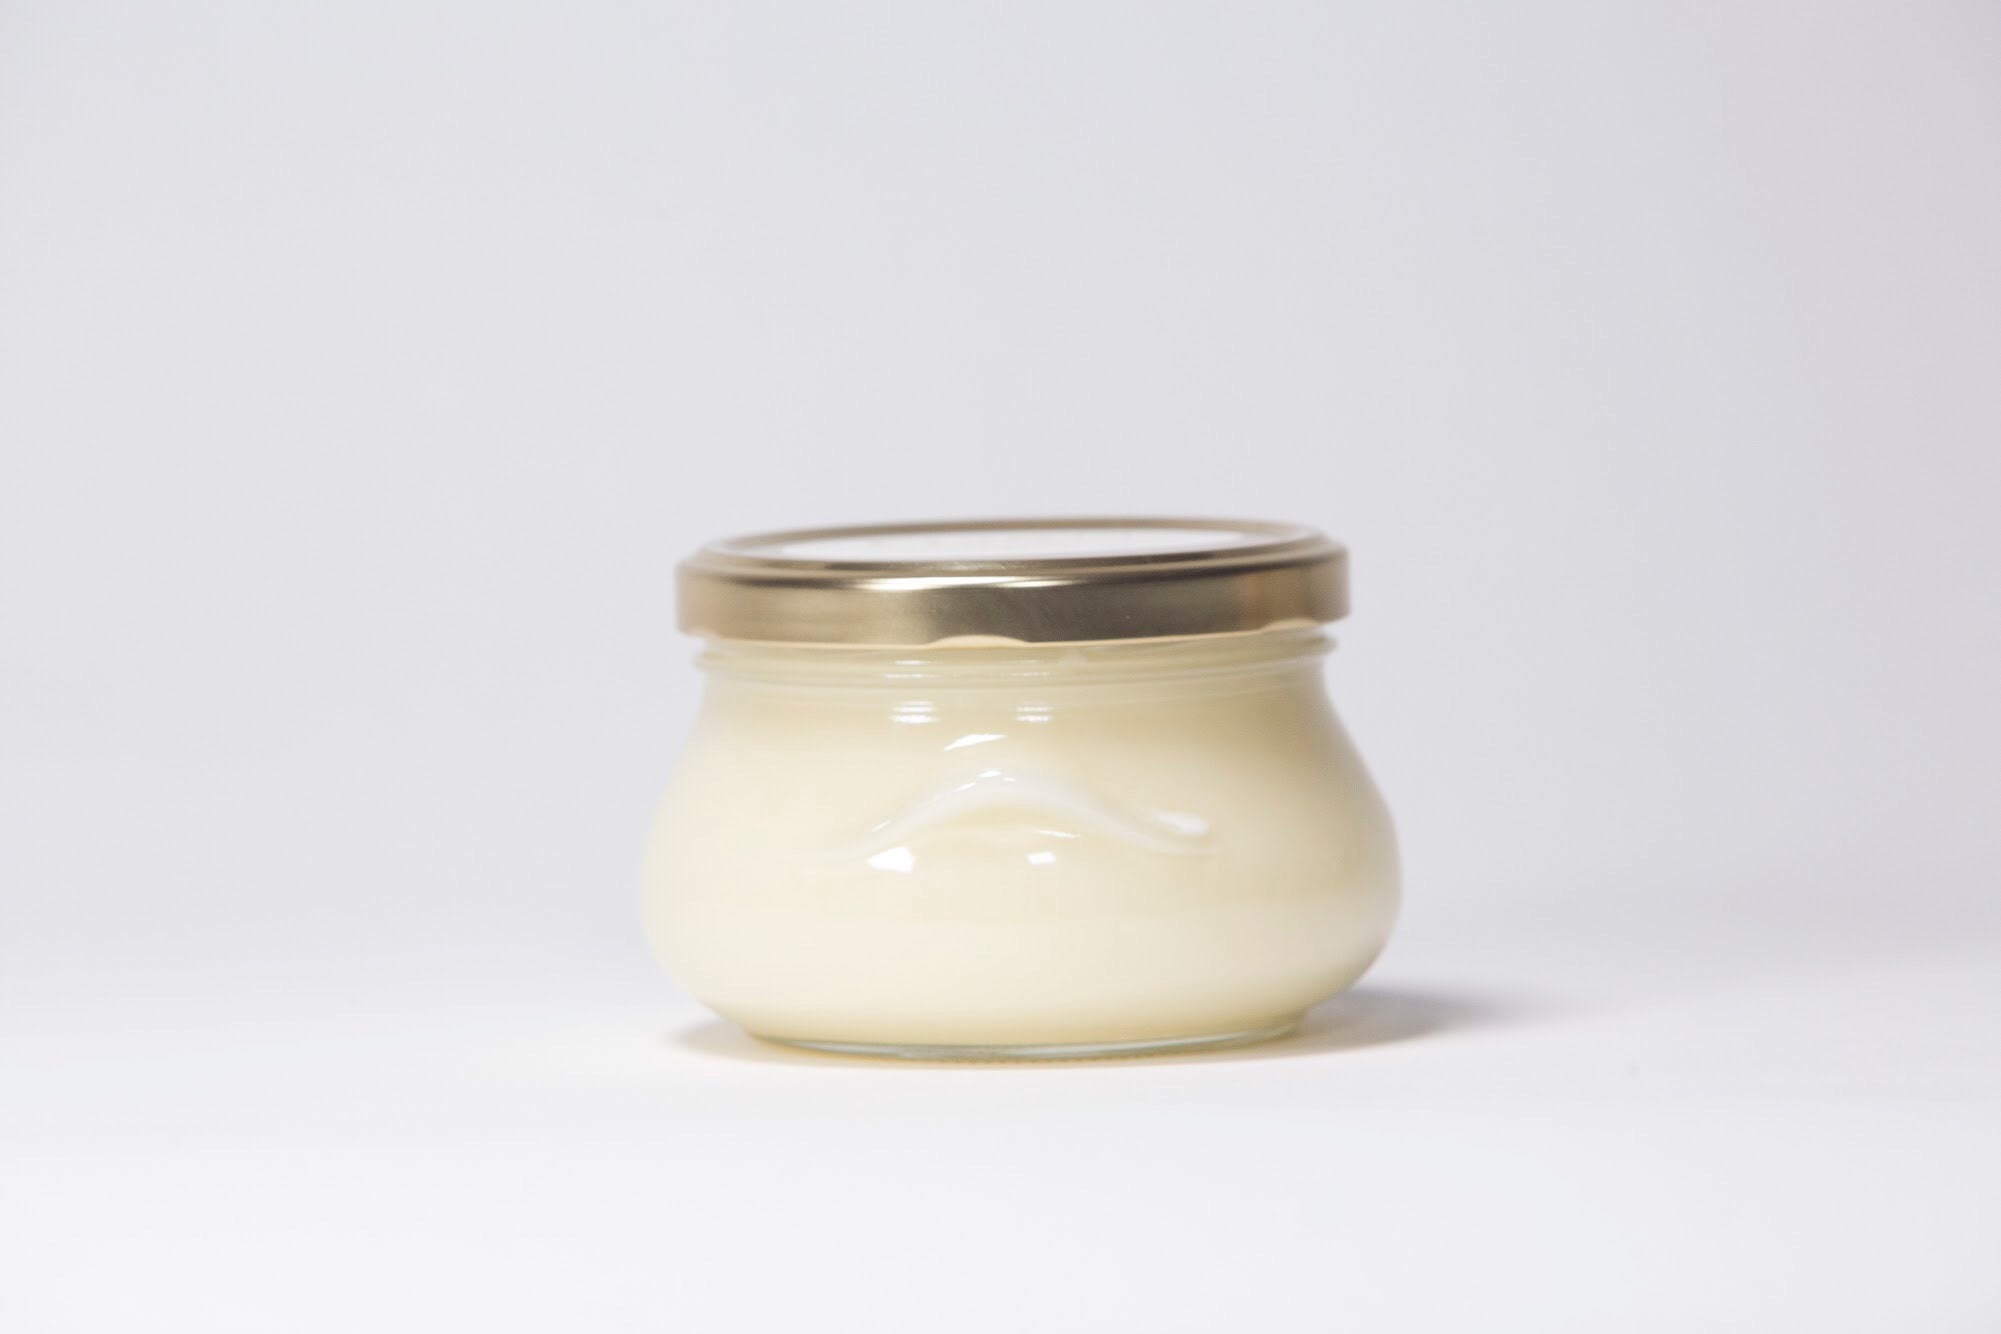 Coconut Lime Verbena - Scented Natural Soy Wax Candle - 16 Oz Mason Jar